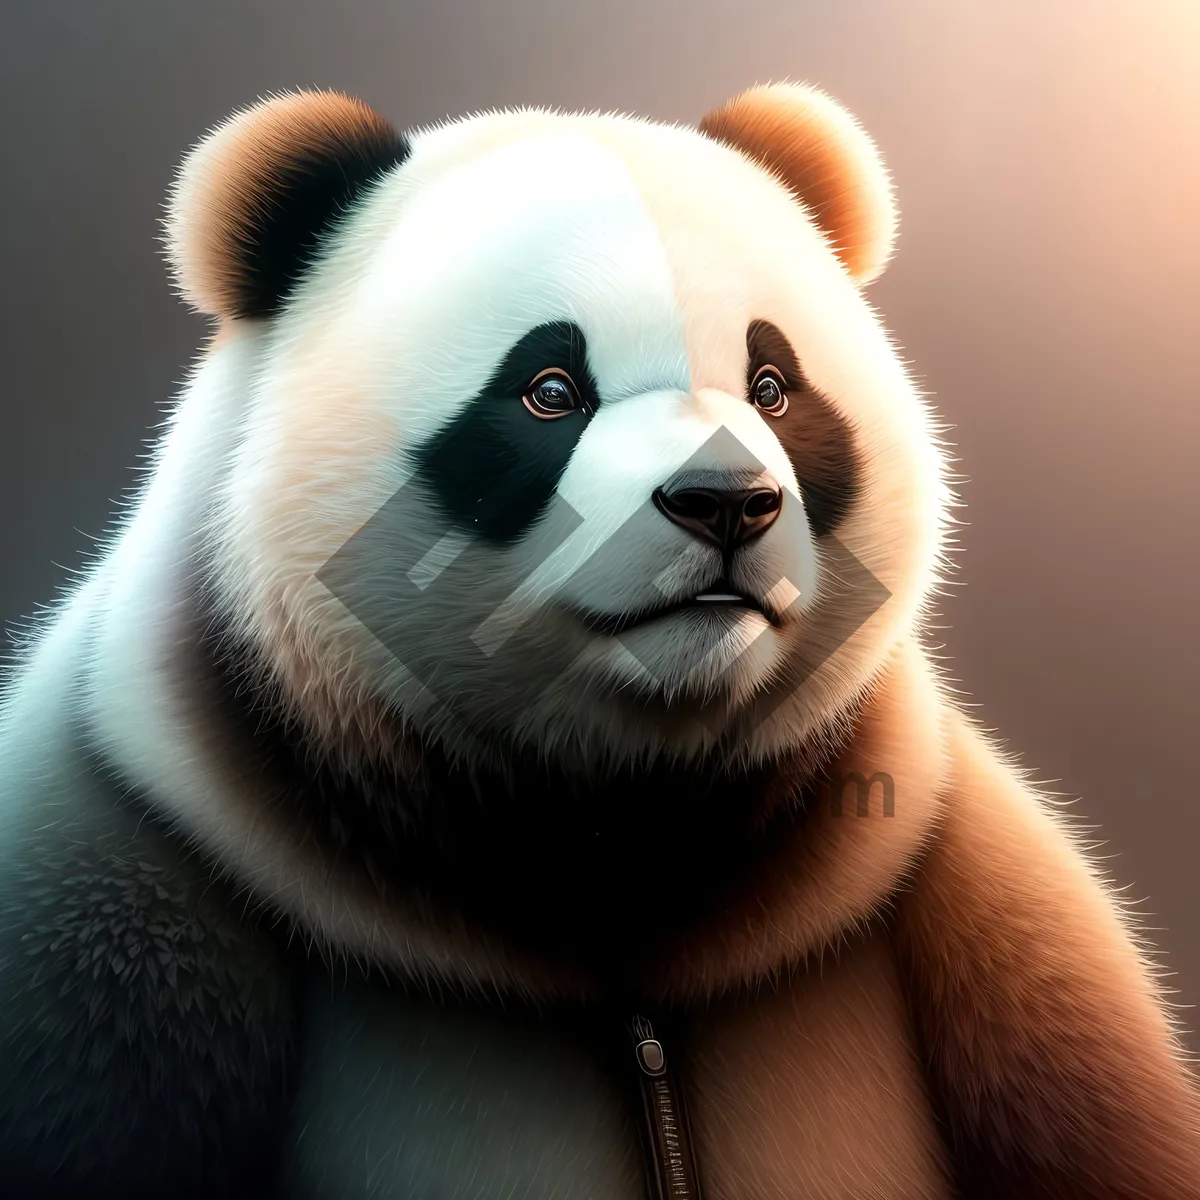 Picture of Cute Giant Panda Bear in Wildlife